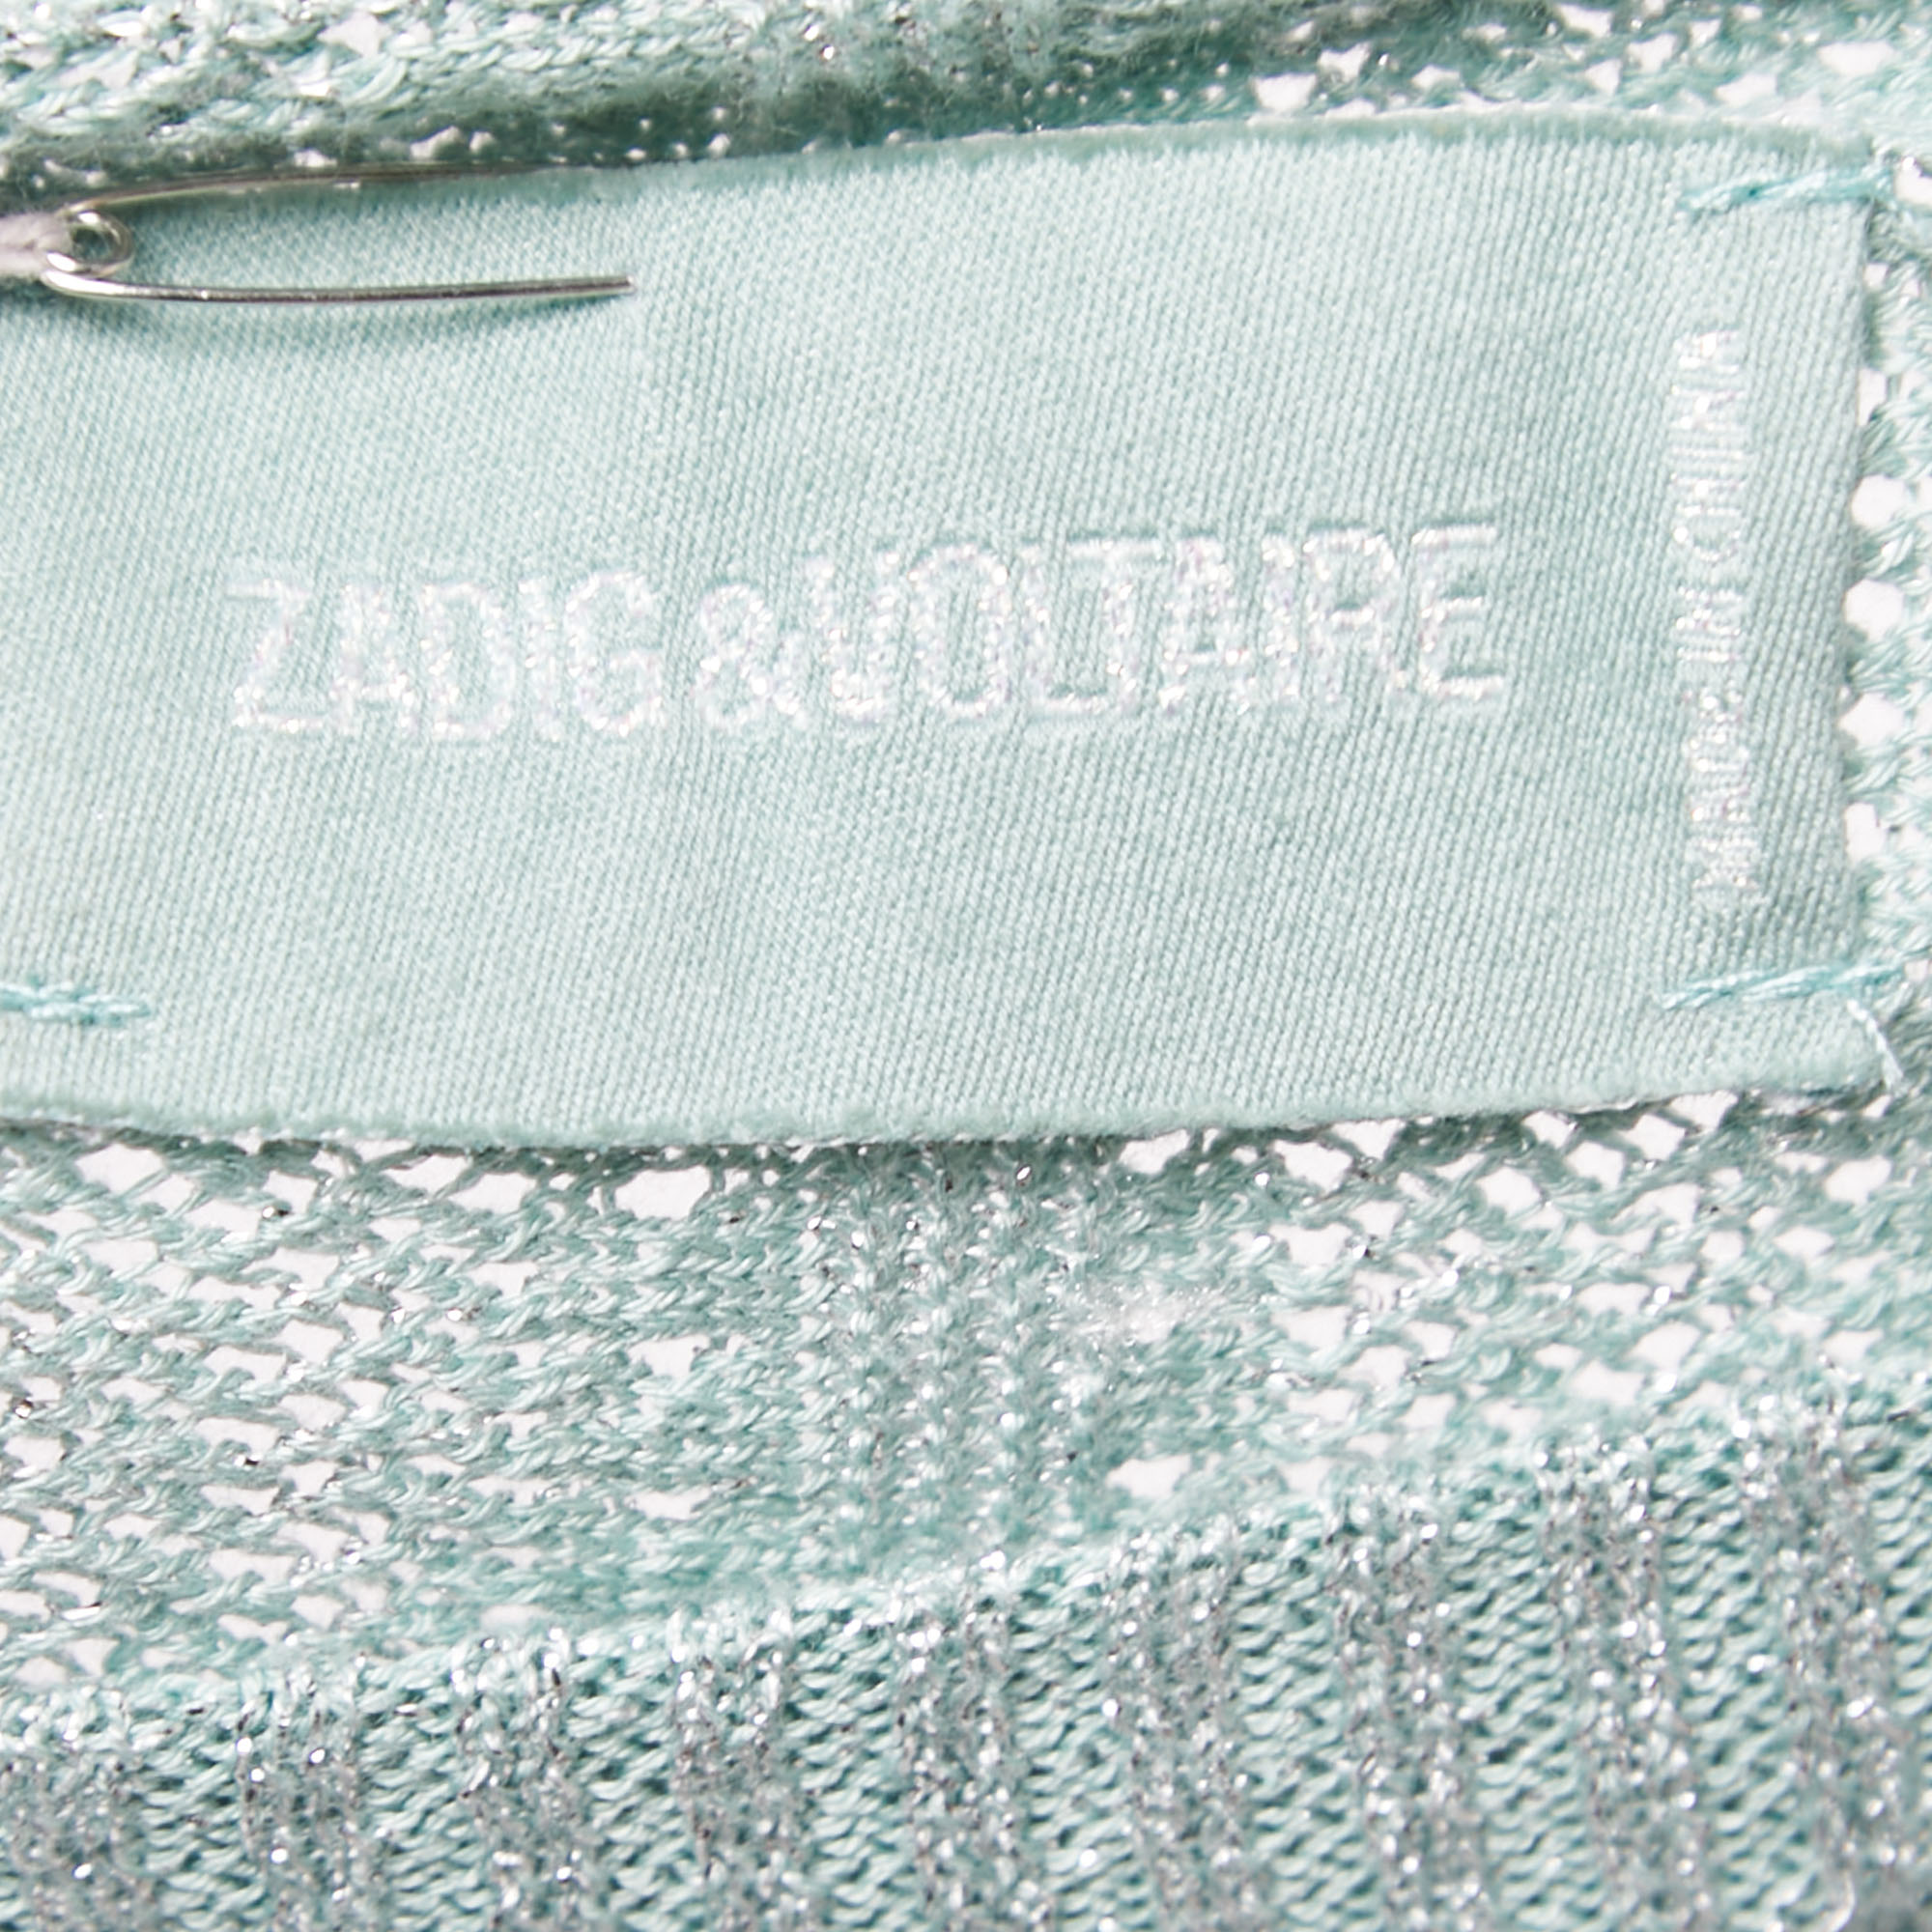 Zadig & Voltaire Aqua Green Pointelle Knit Top L